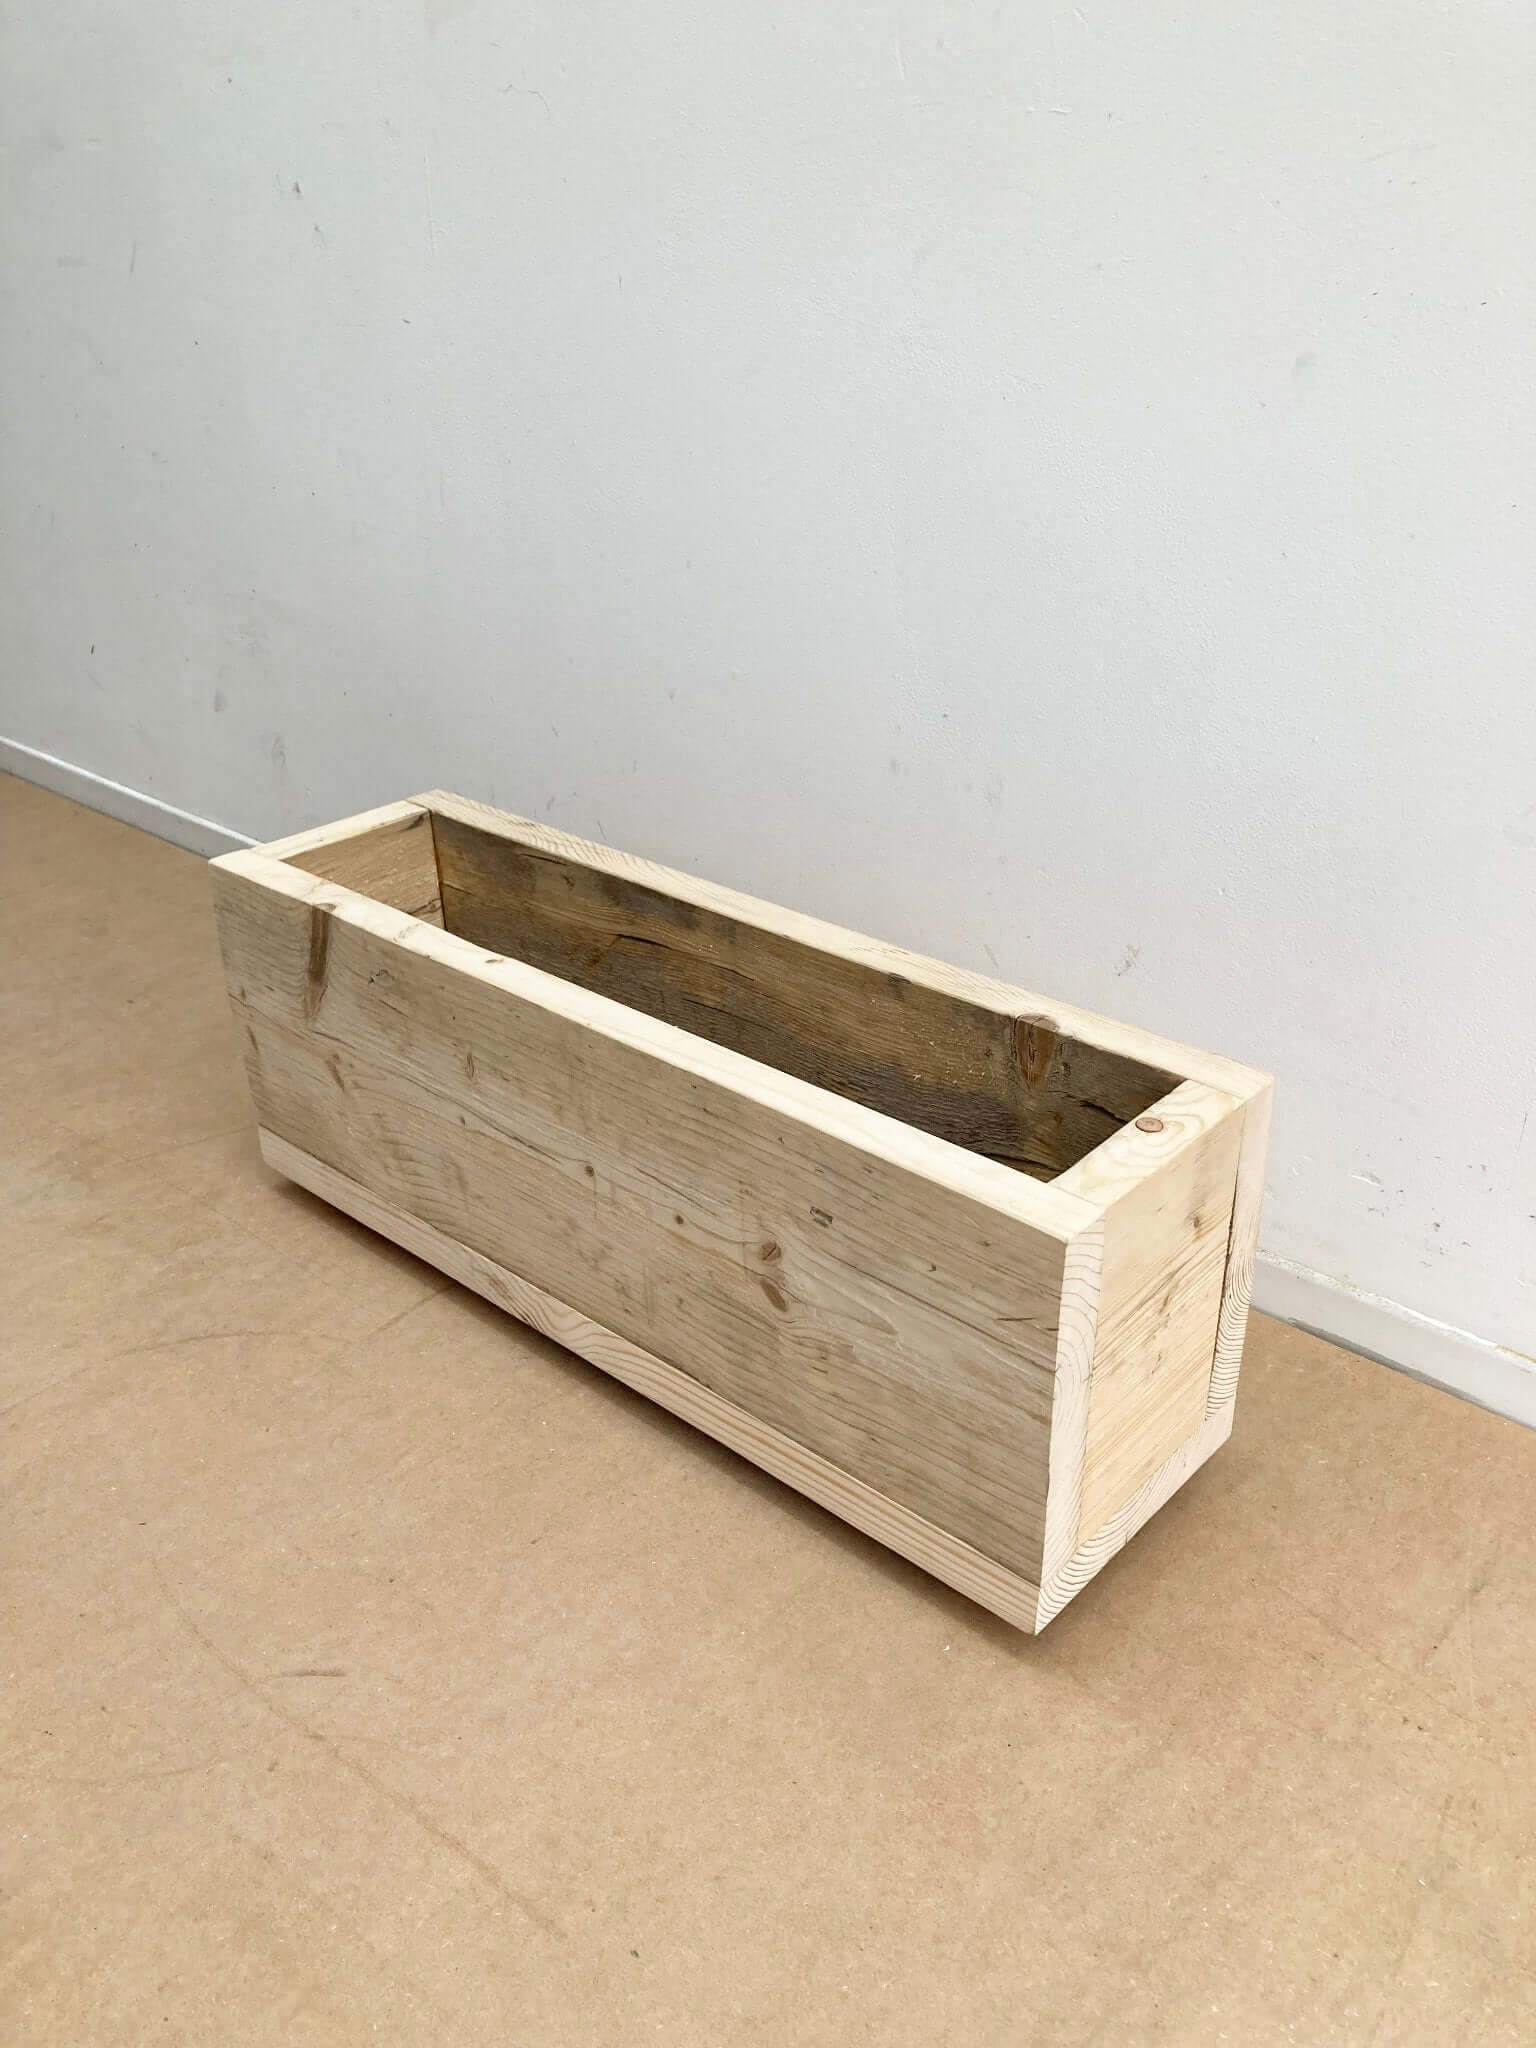 Reclaimed wood planter window box.